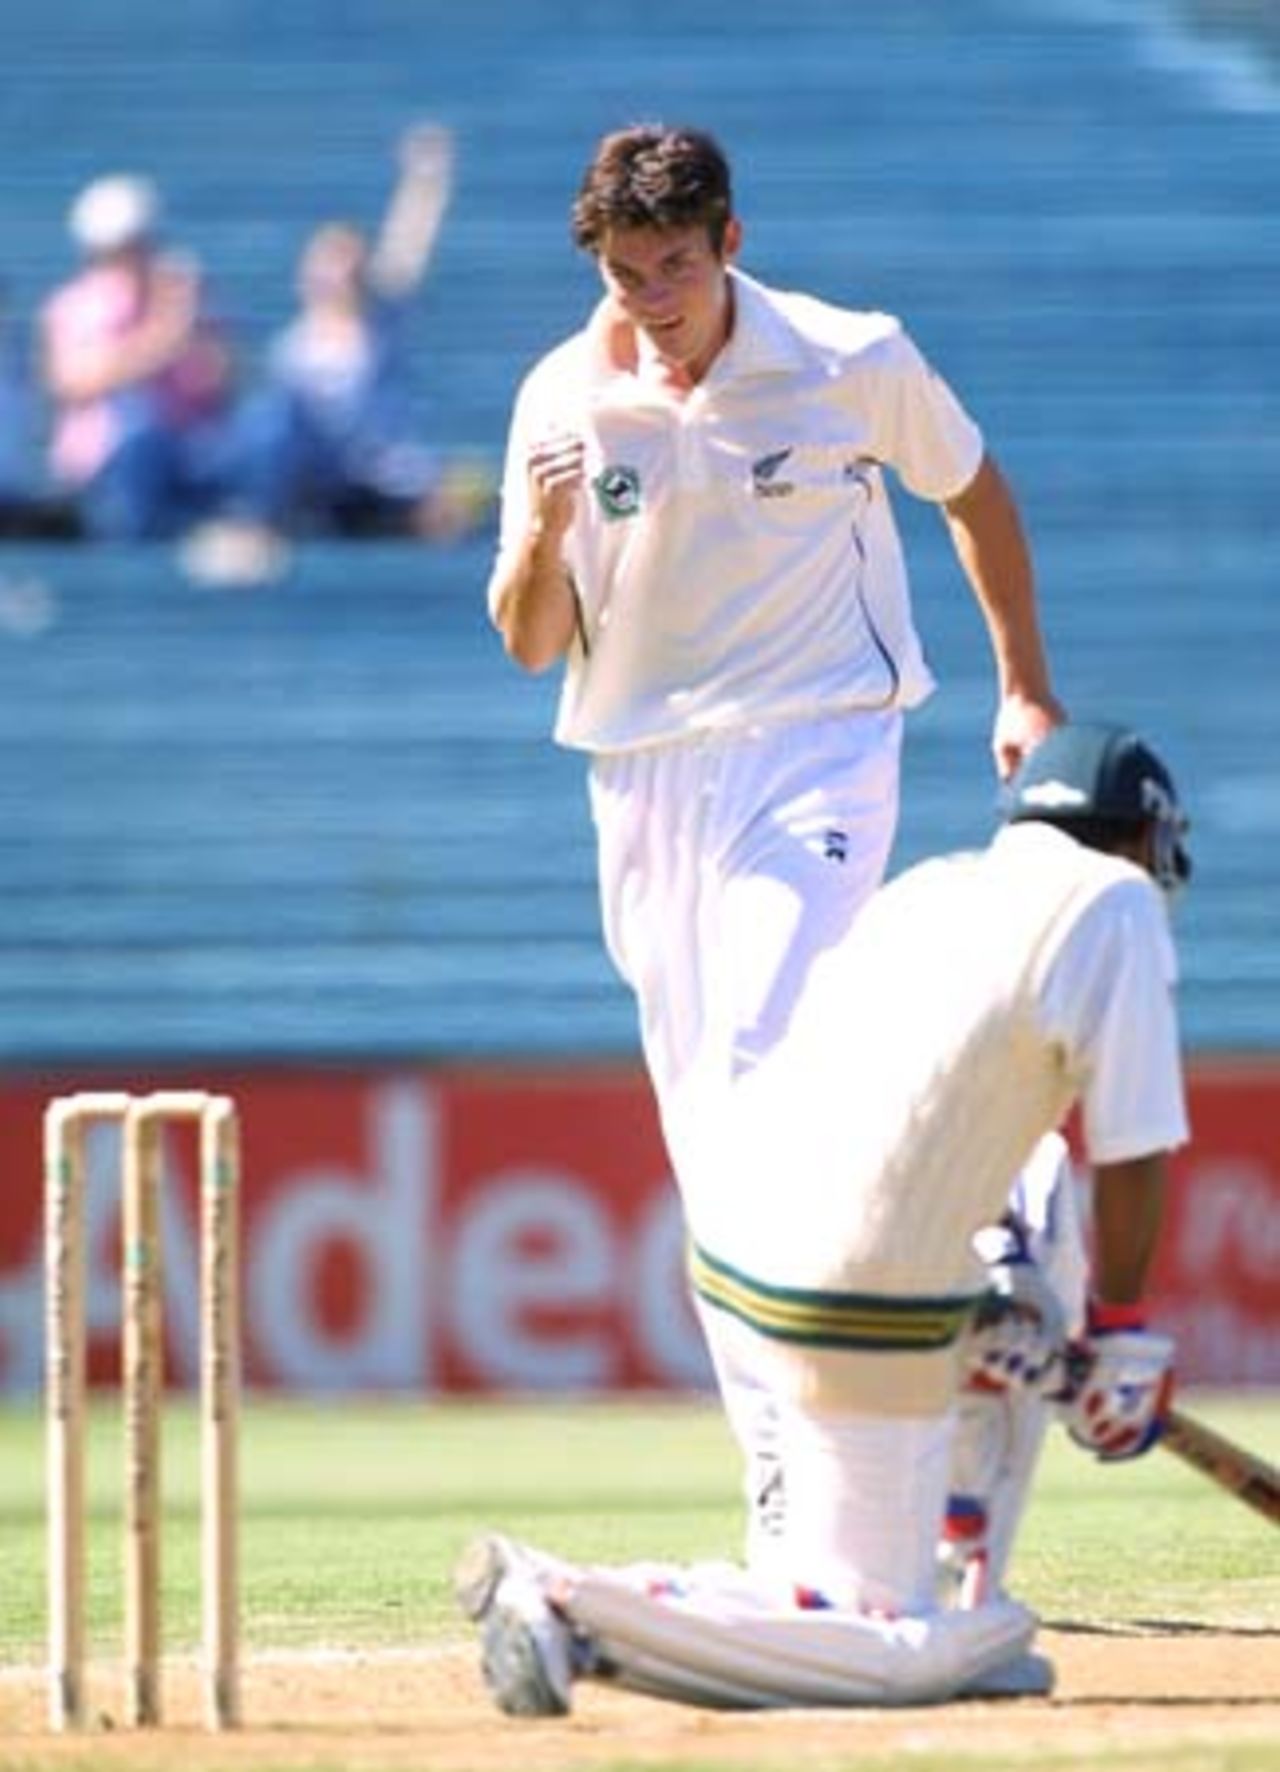 New Zealand left arm medium fast bowler James Franklin celebrates dismissing Pakistan batsman Yousuf Youhana (kneeling), caught at second slip by Nathan Astle for 42. 1st Test: New Zealand v Pakistan at Eden Park, Auckland, 8-12 March 2001 (11 March 2001).